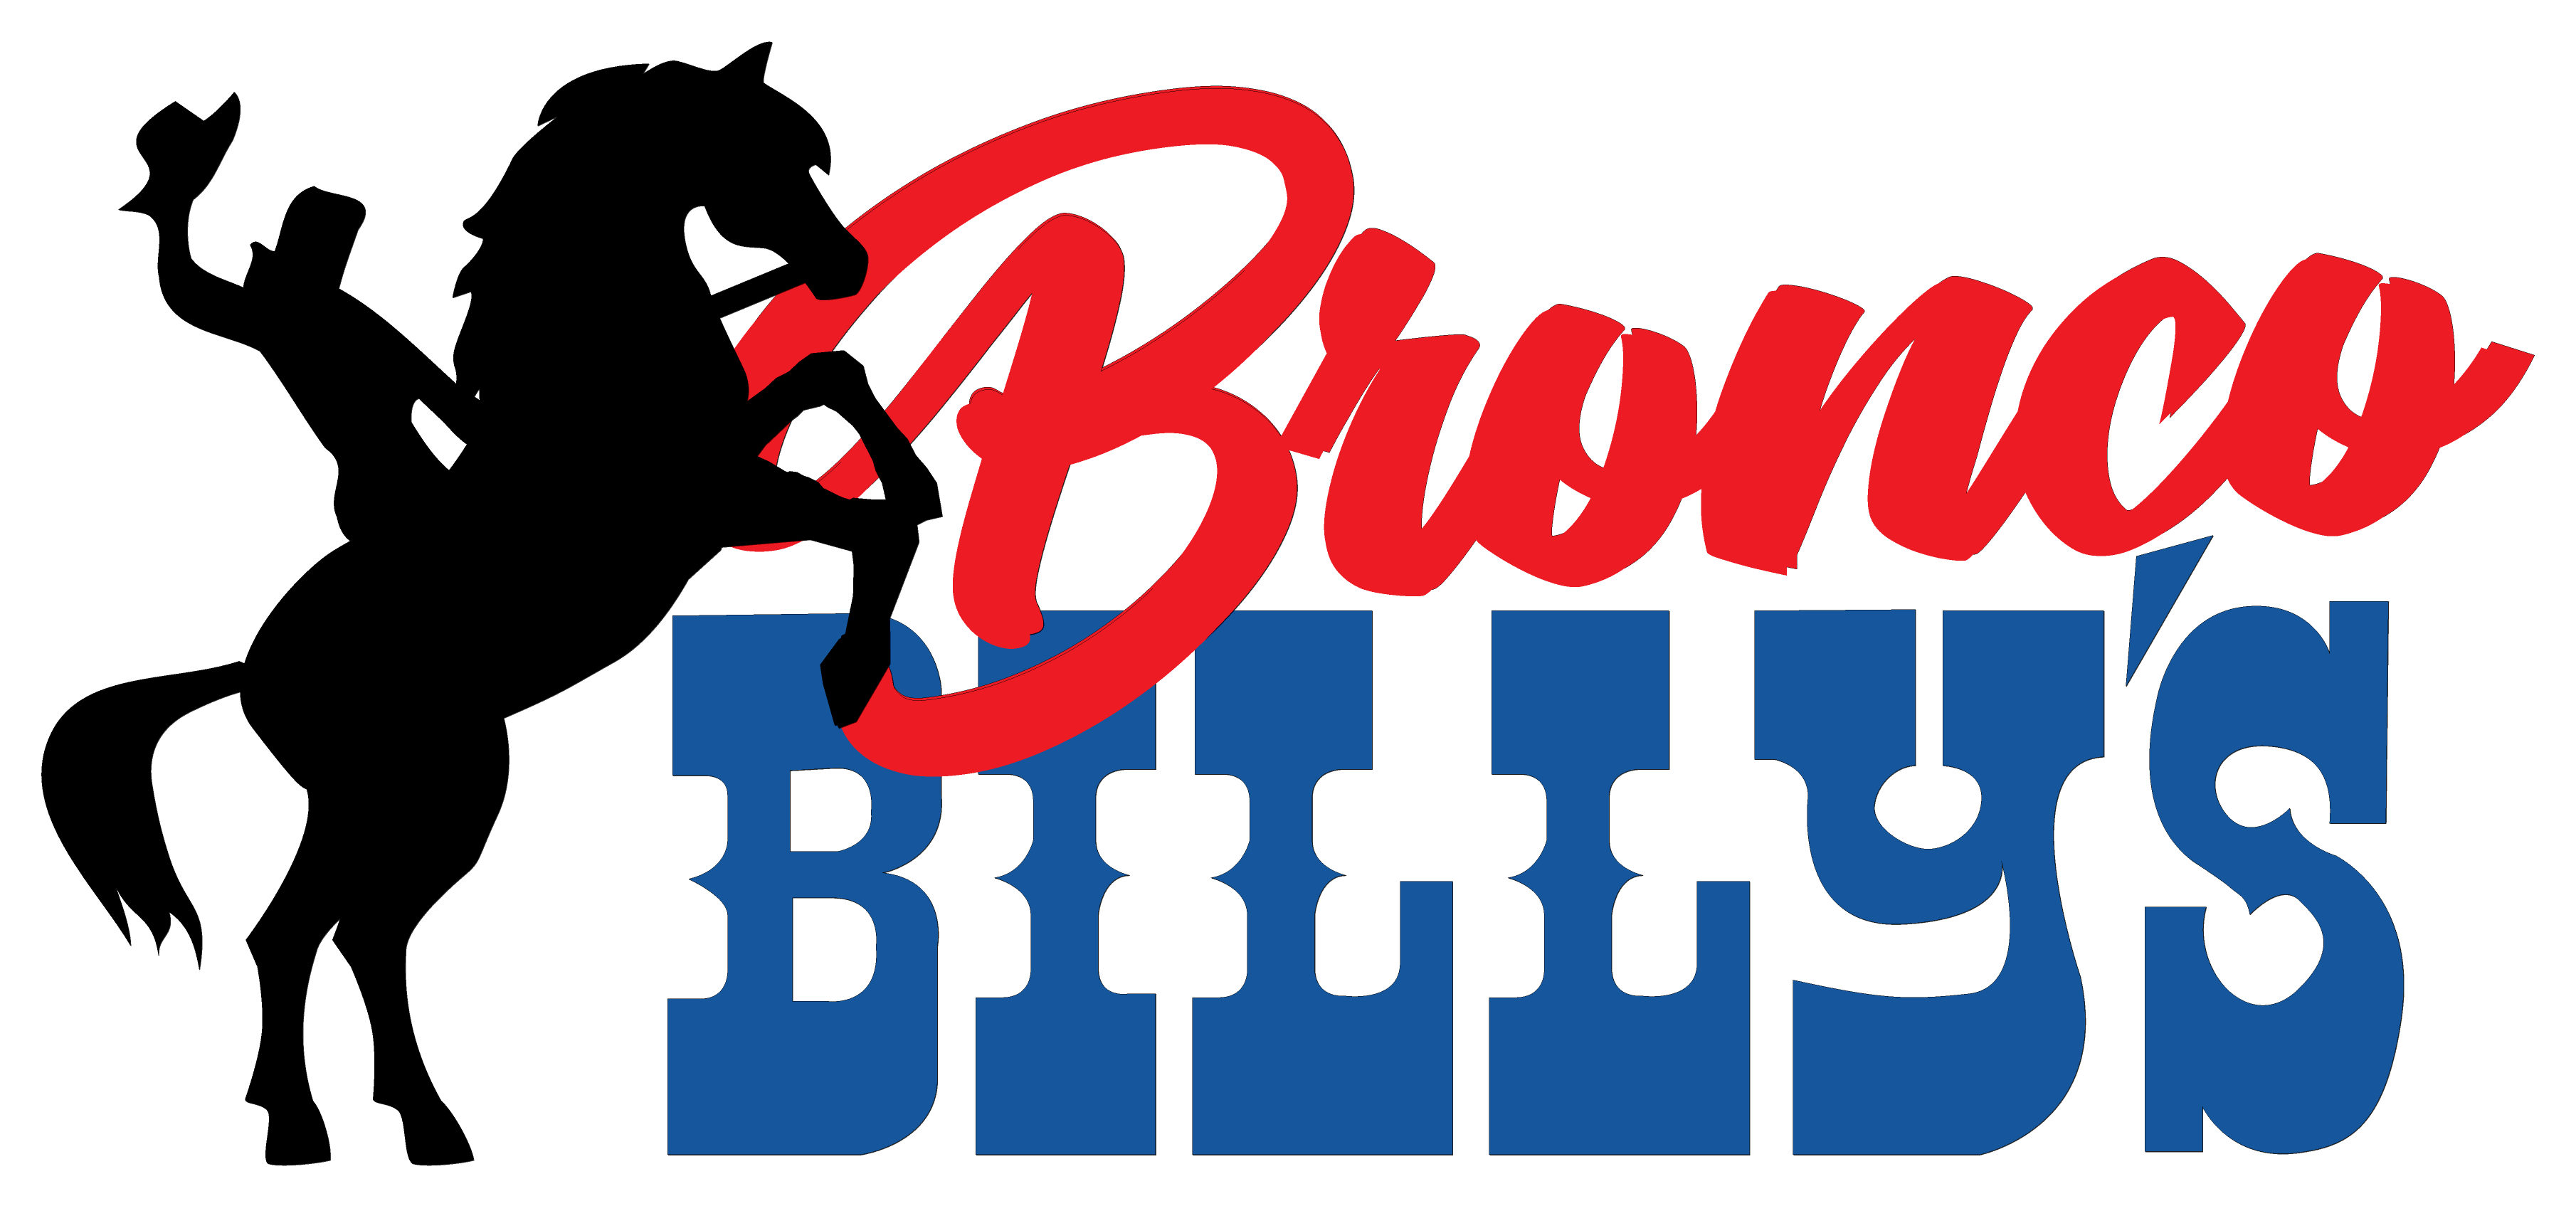 Bronco Billy's Casino Logo